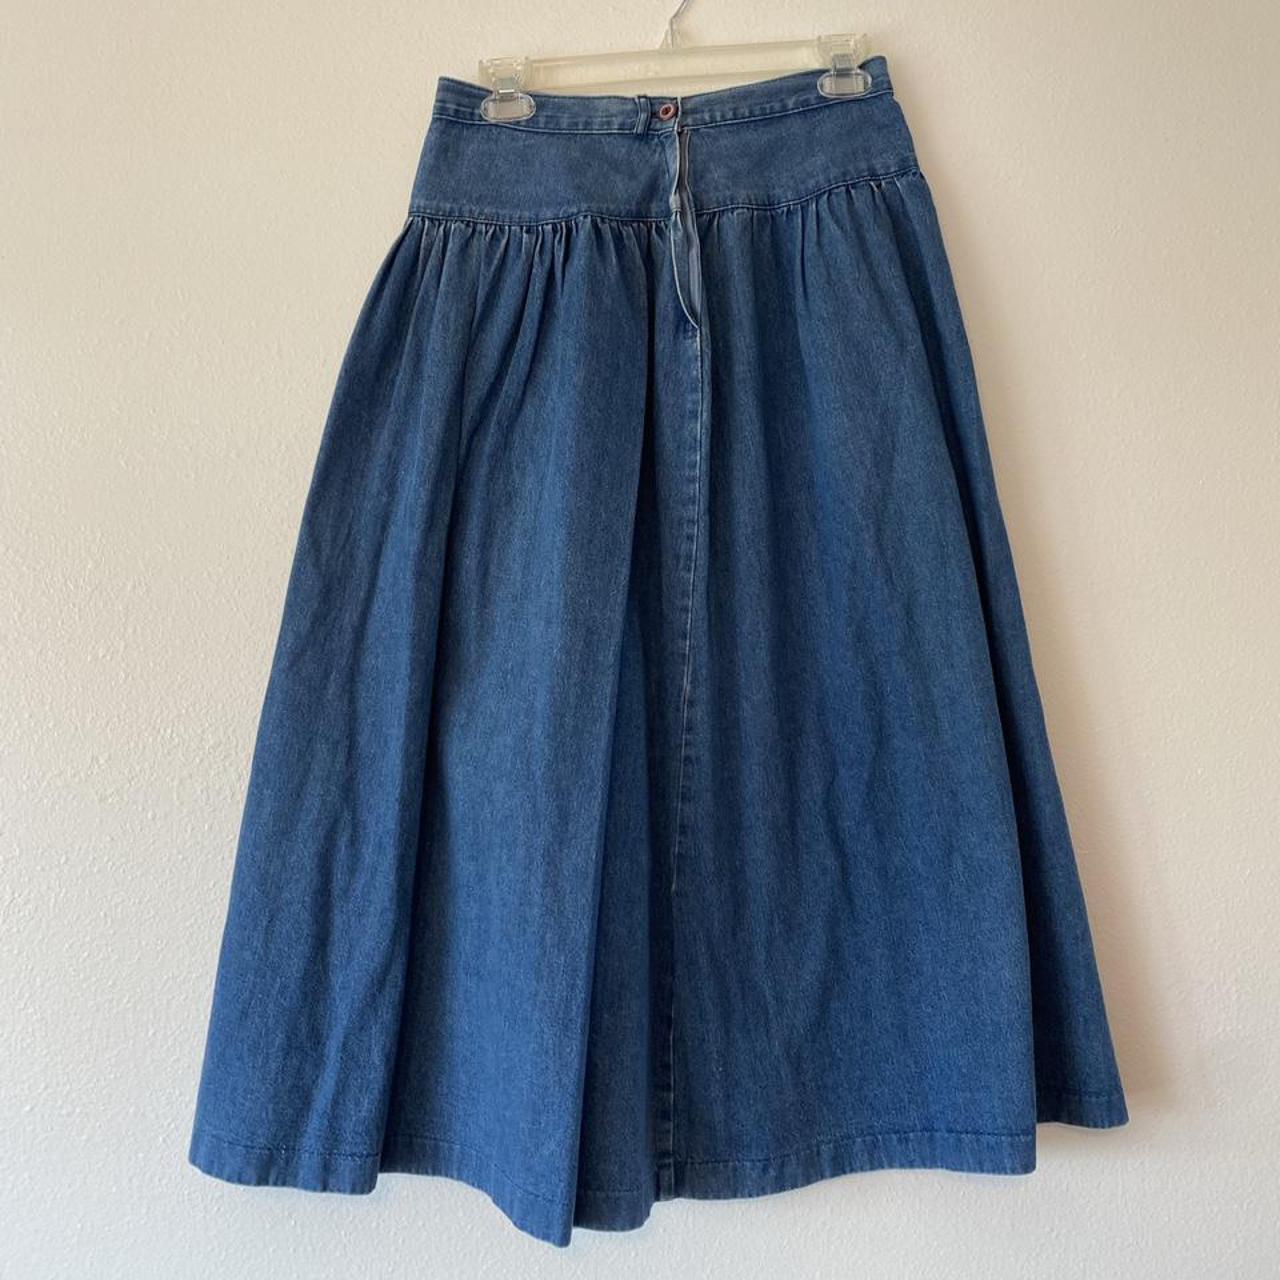 🌟FREE SHIPPING🌟 Vintage Brittania denim skirt.... - Depop